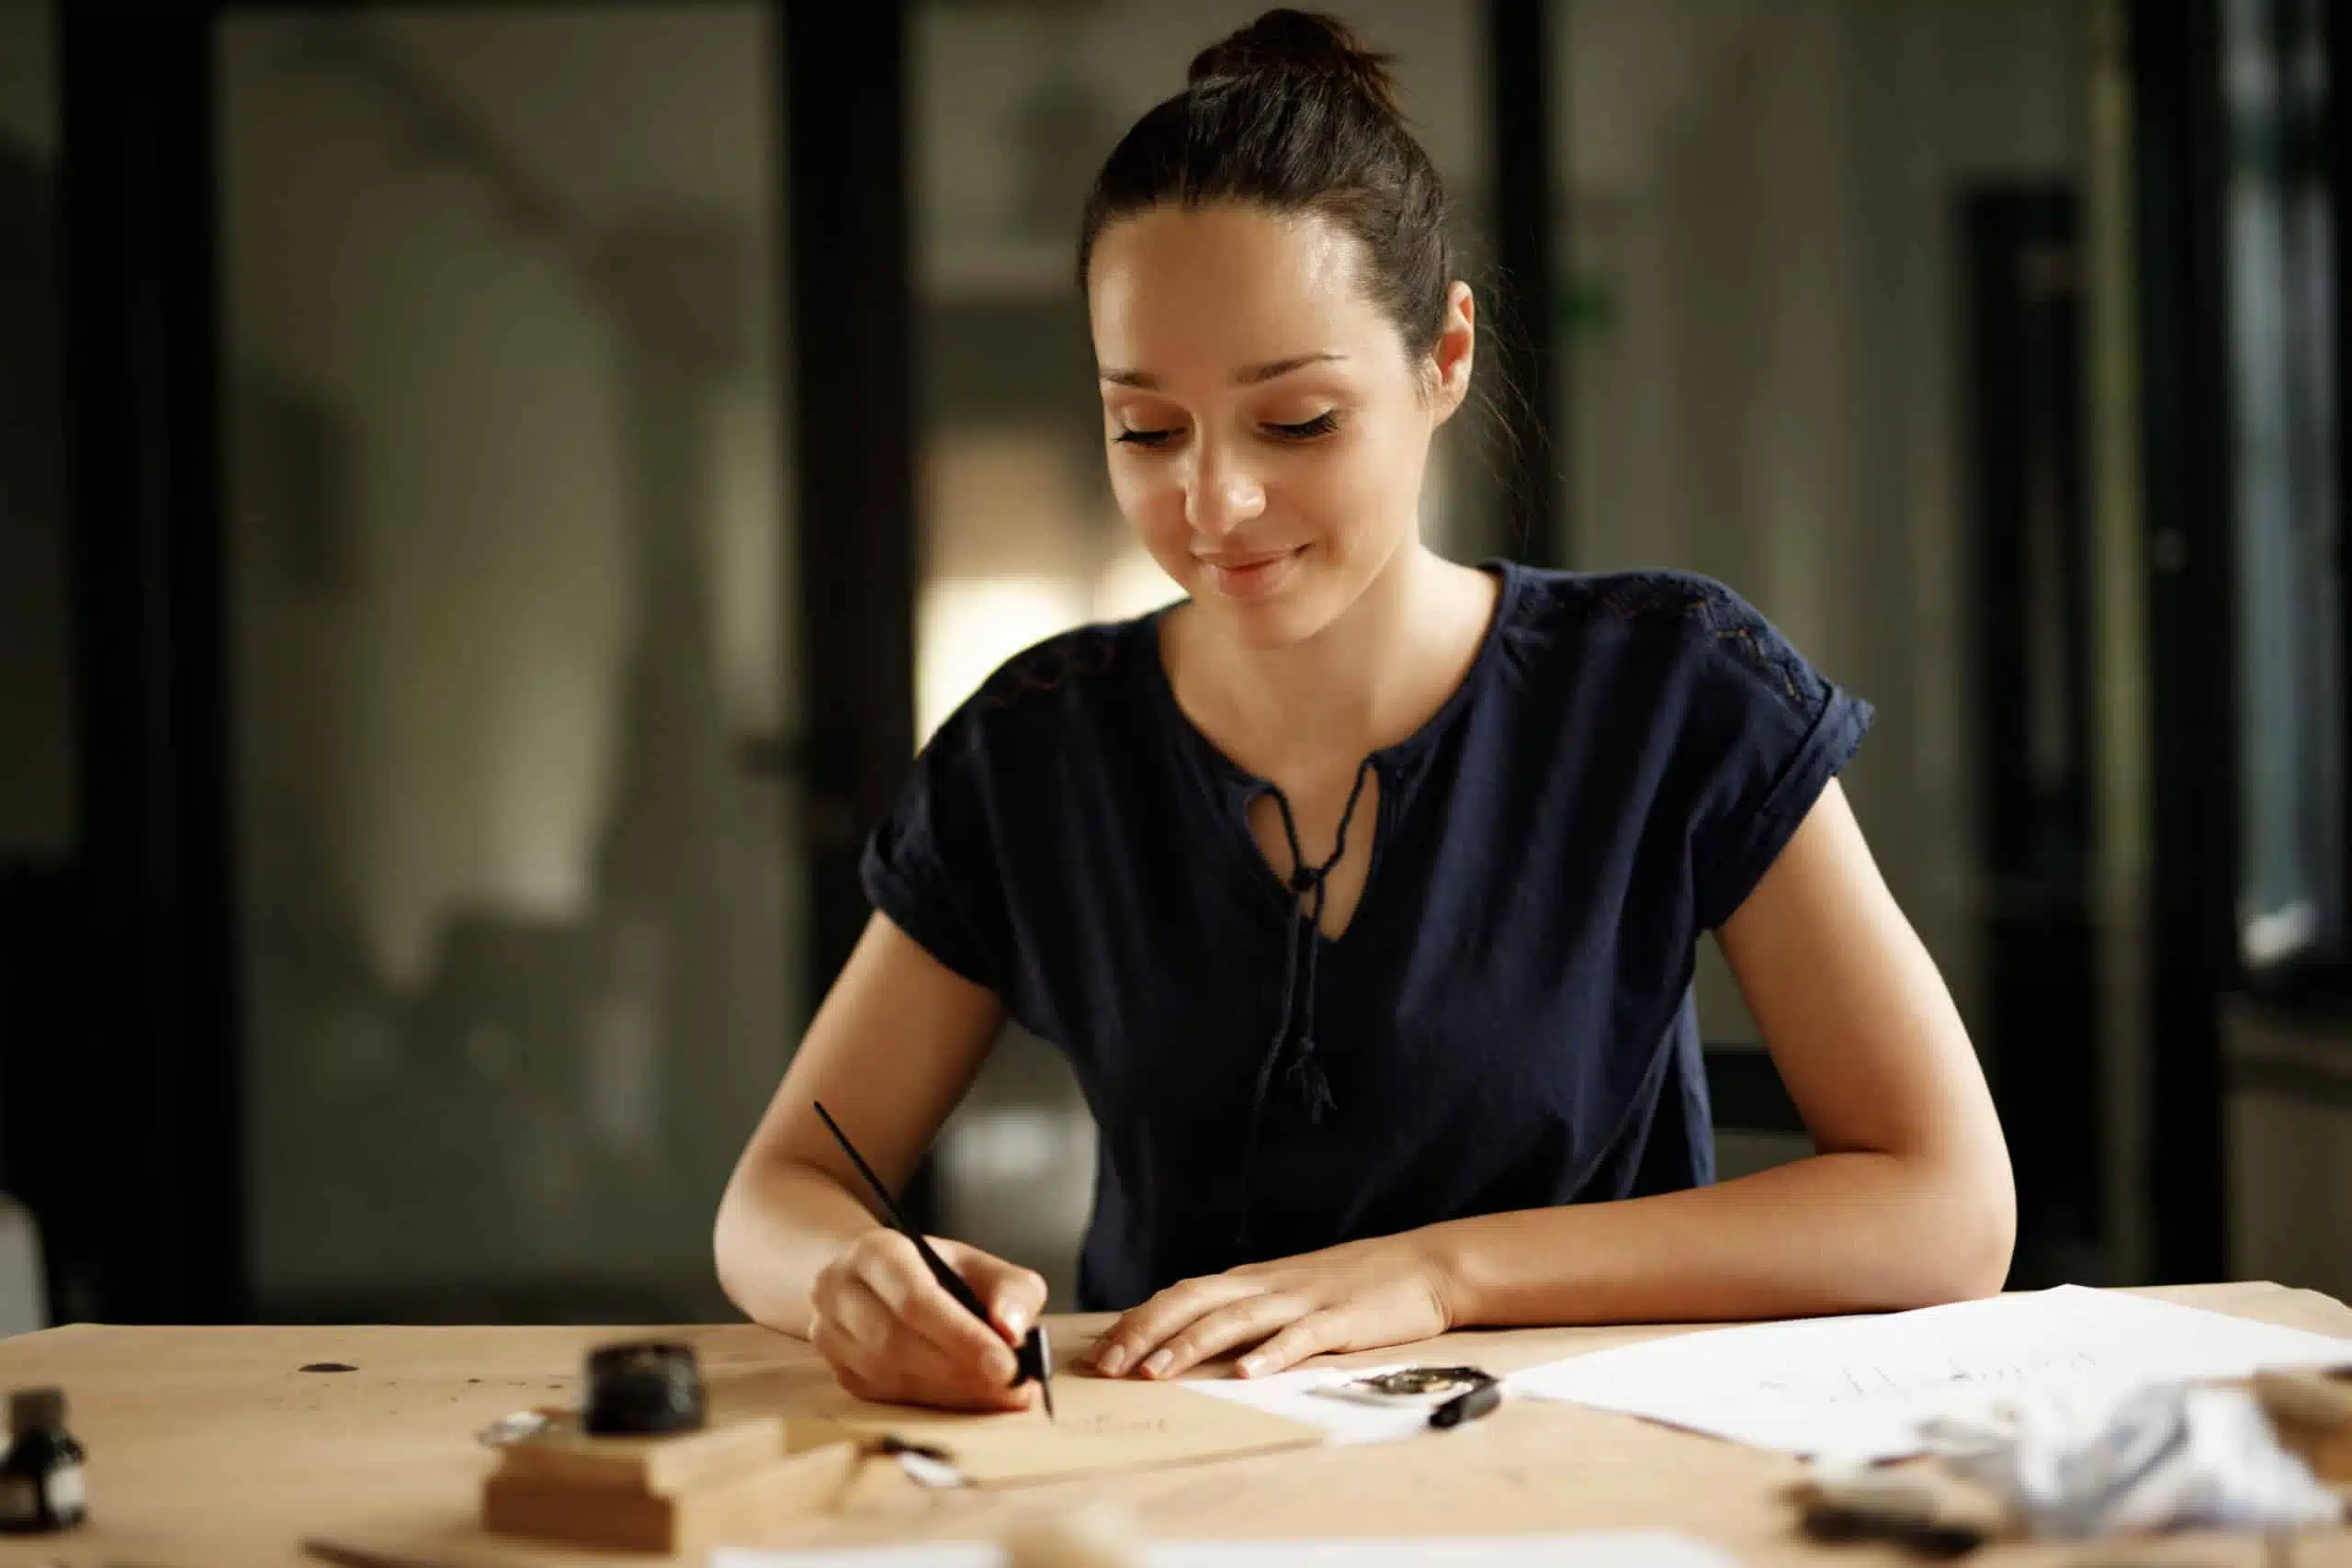 Beautiful smiling young woman writing with fountain pen.